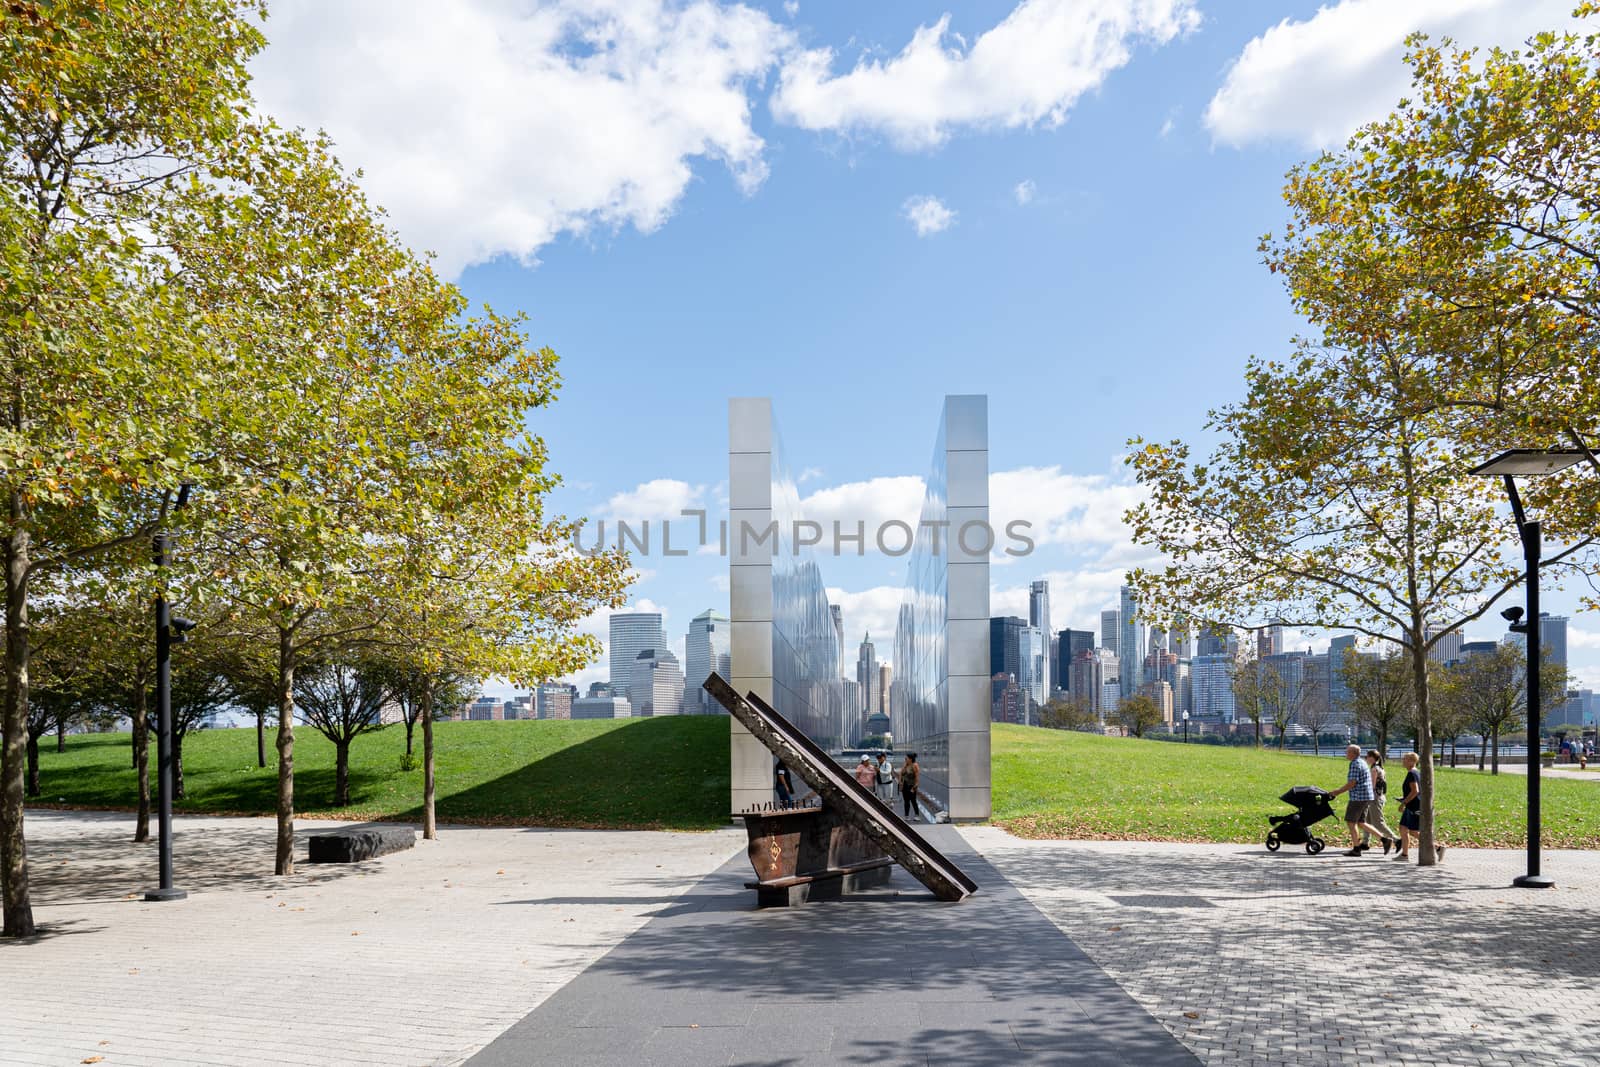 Empty Sky Memorial in Jersey City, USA by oliverfoerstner